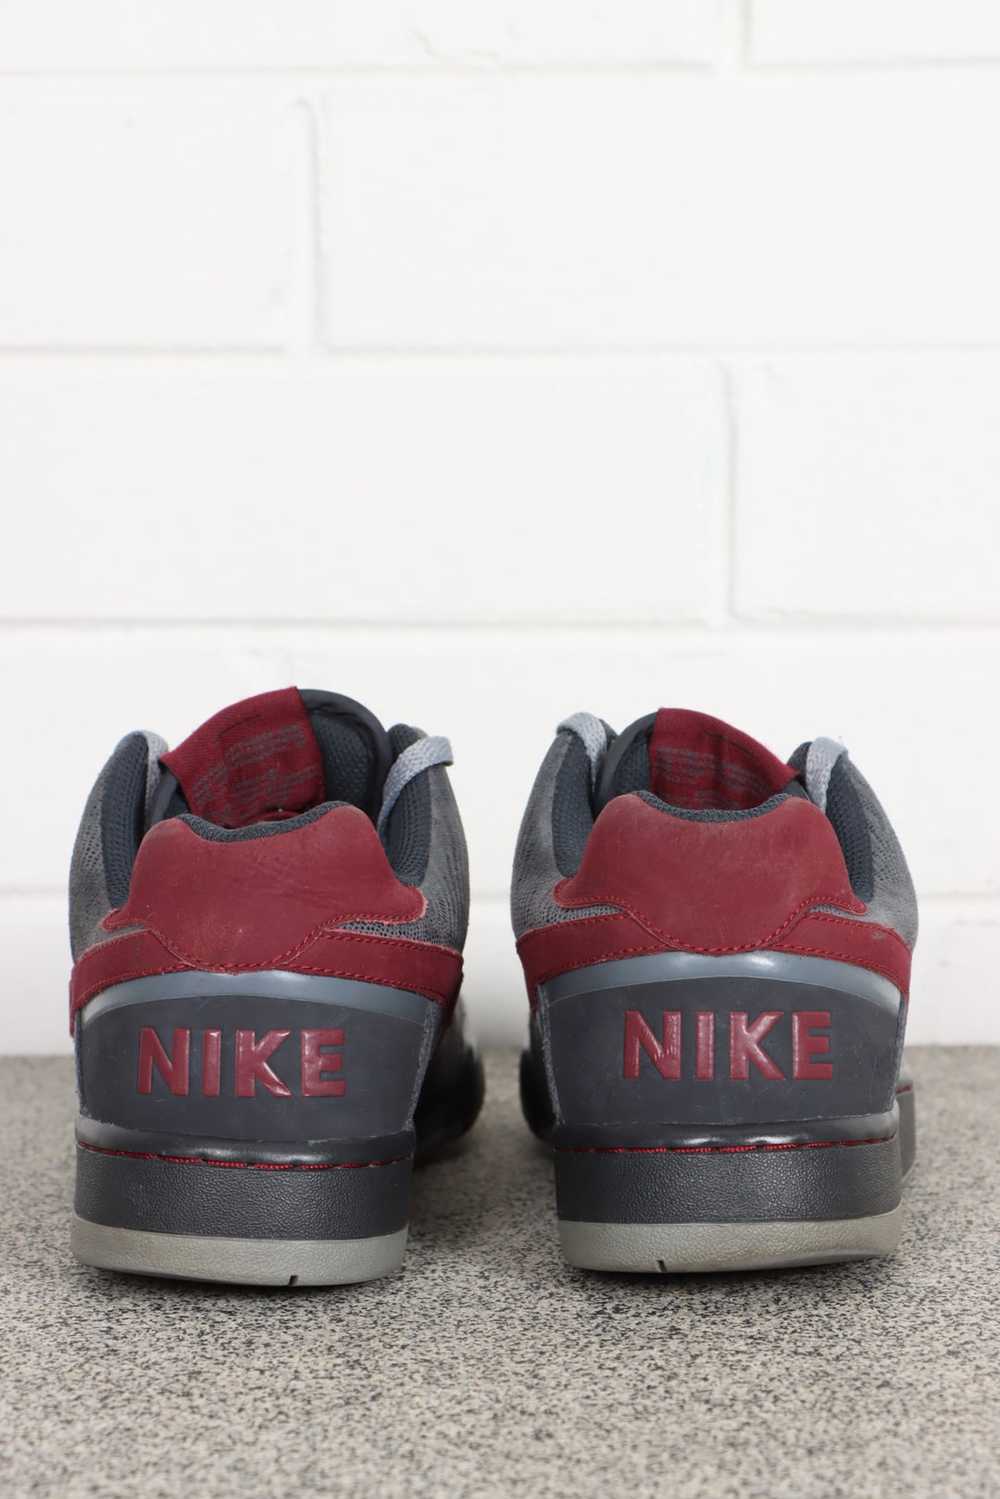 NIKE Delta Force Low Grey/Maroon Sneakers (8.5) - image 4